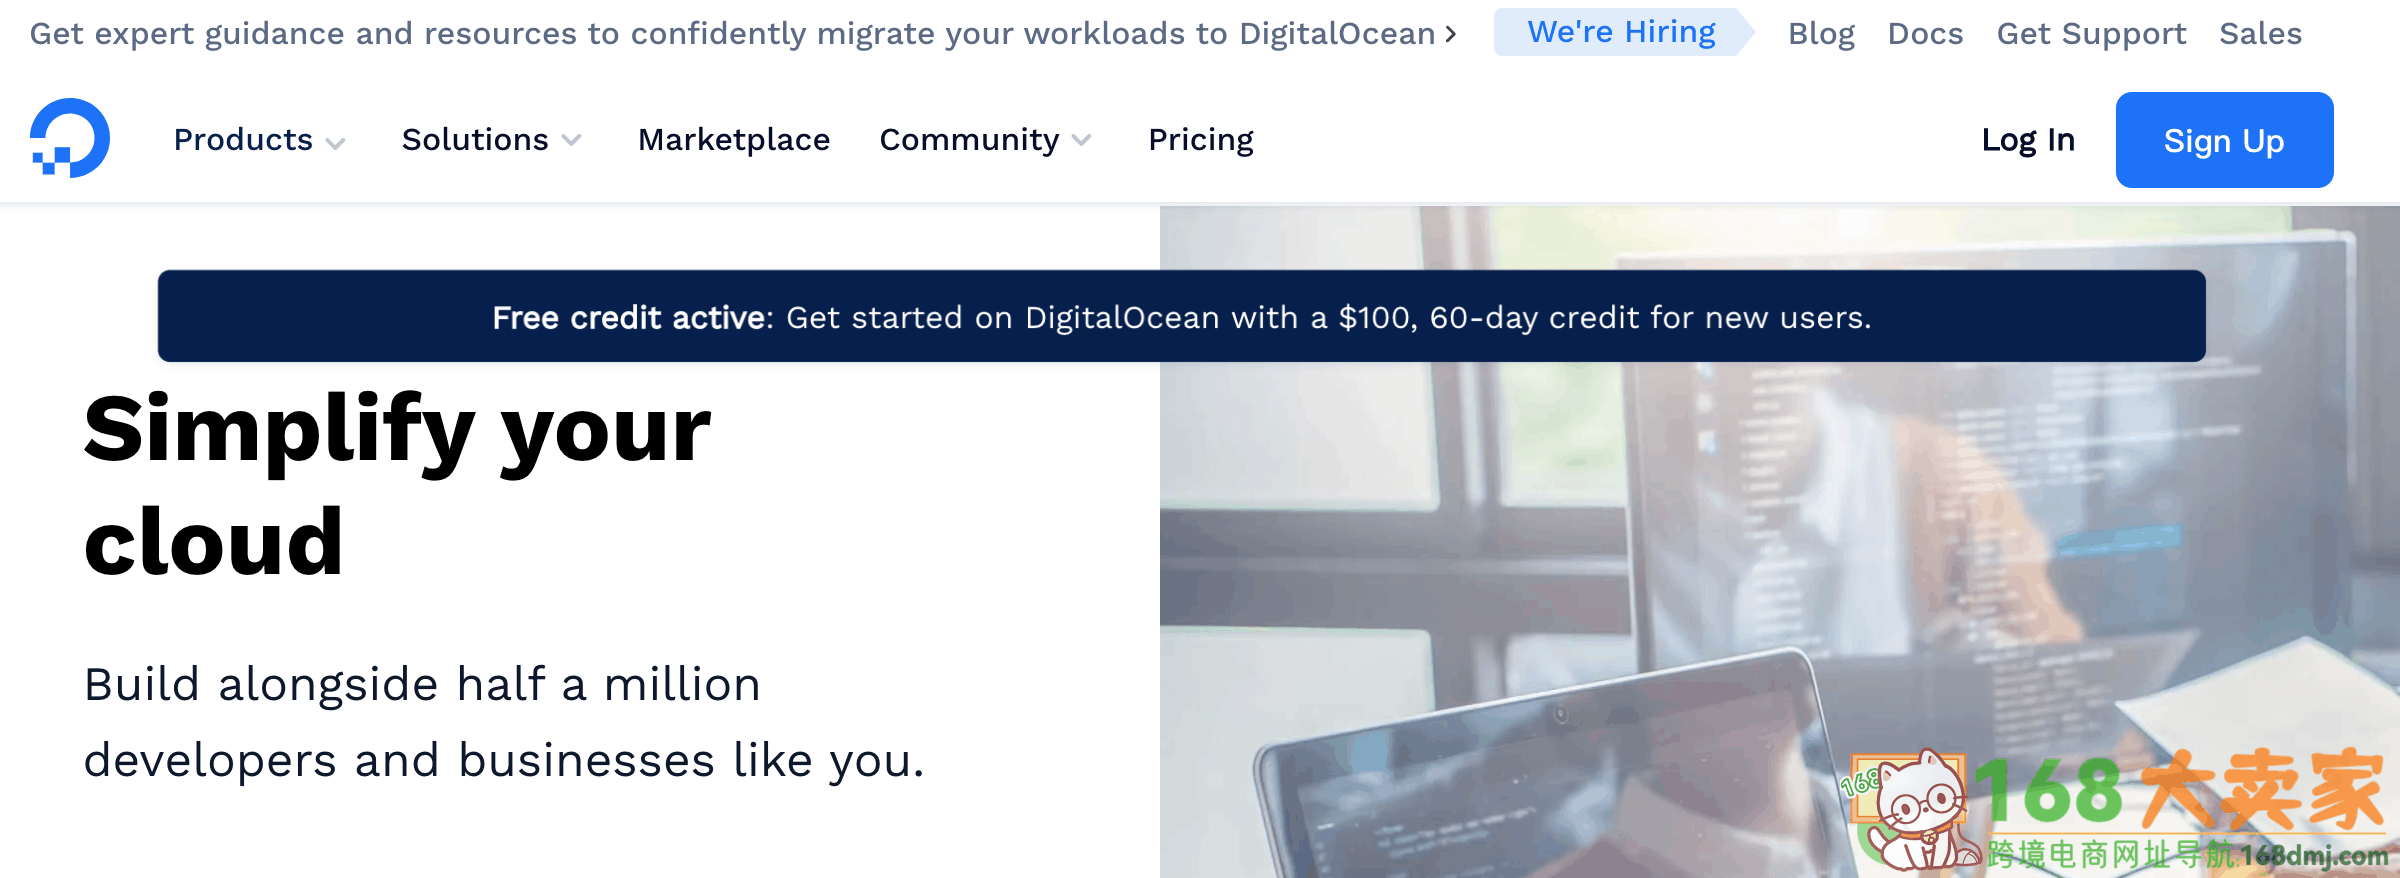 digitalocean